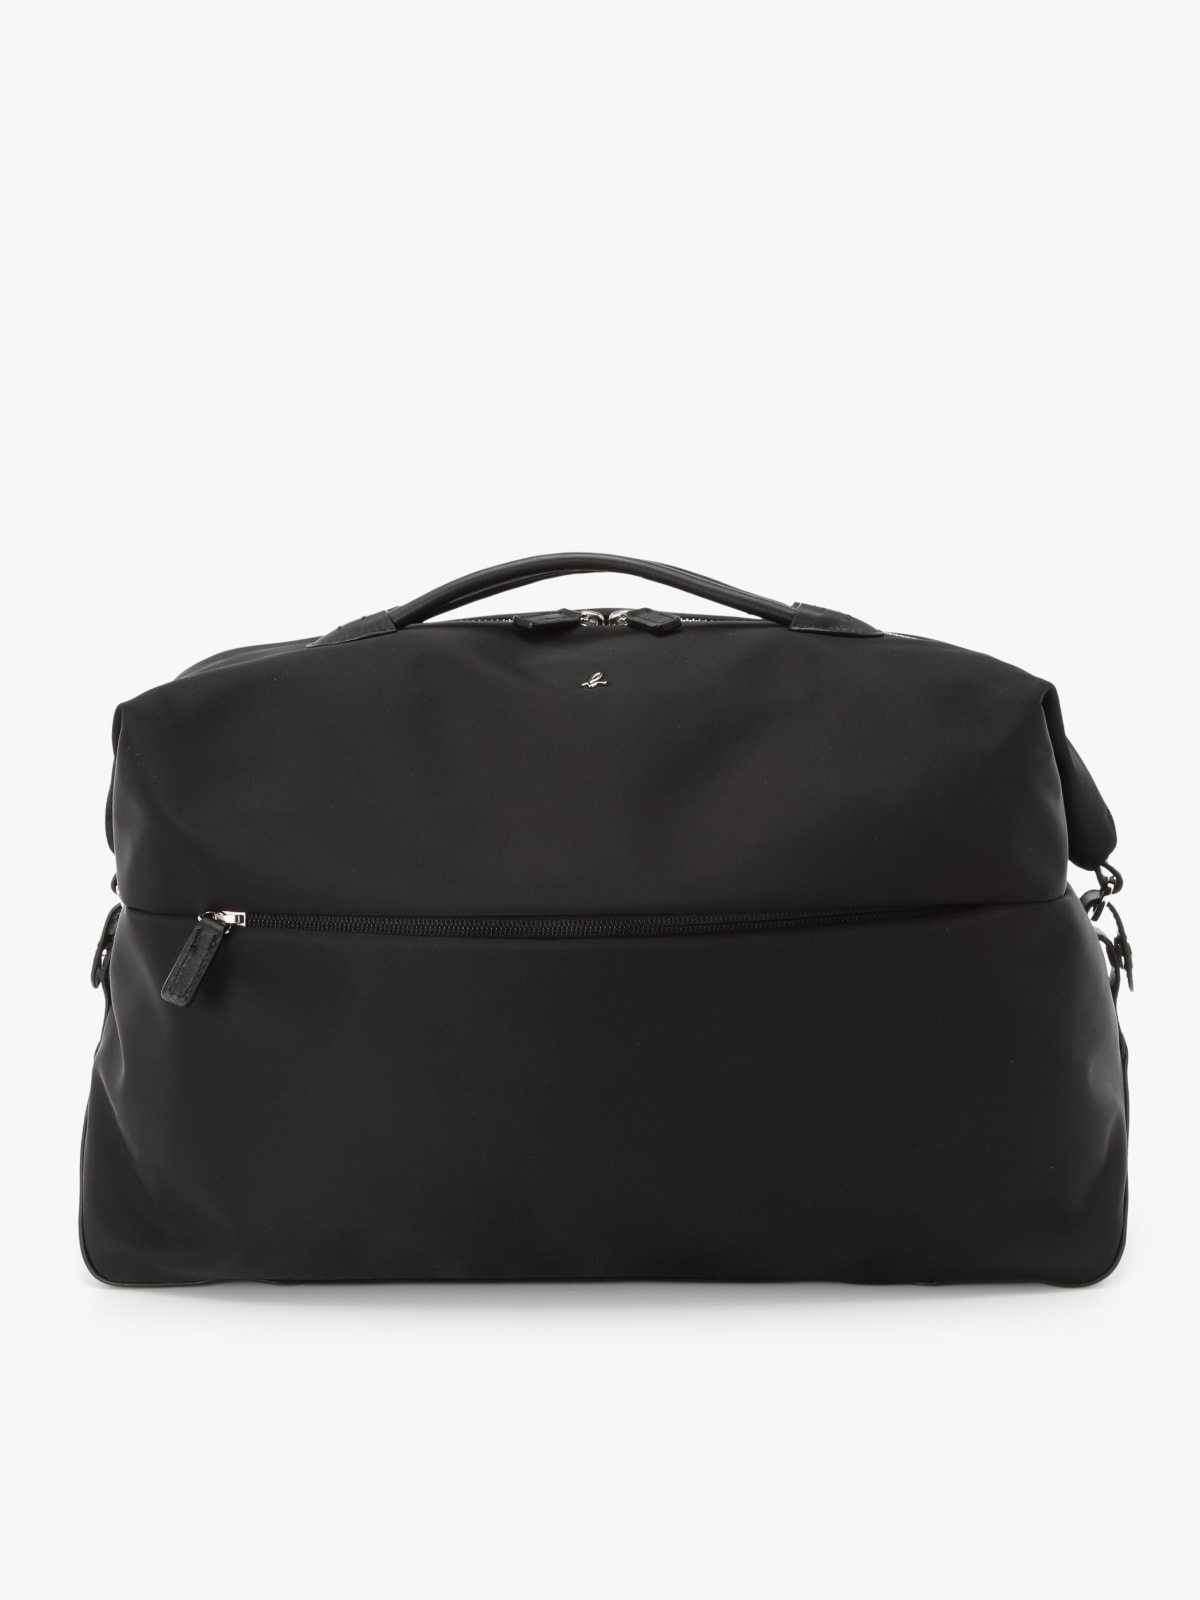 black nylon strap bag